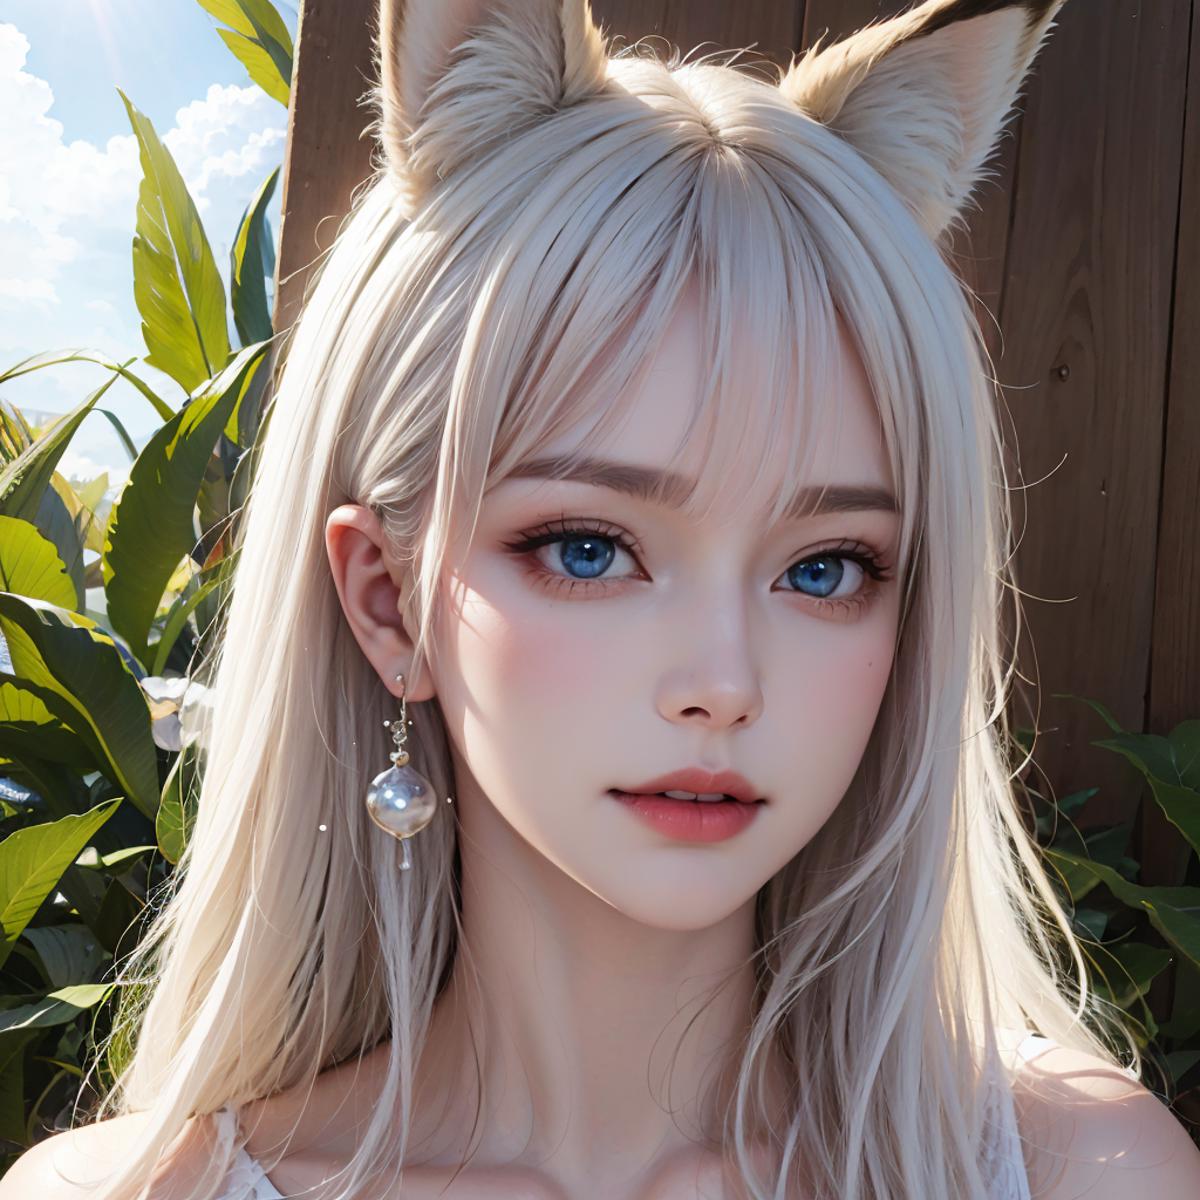 fox girl——小狐娘 image by wrs11